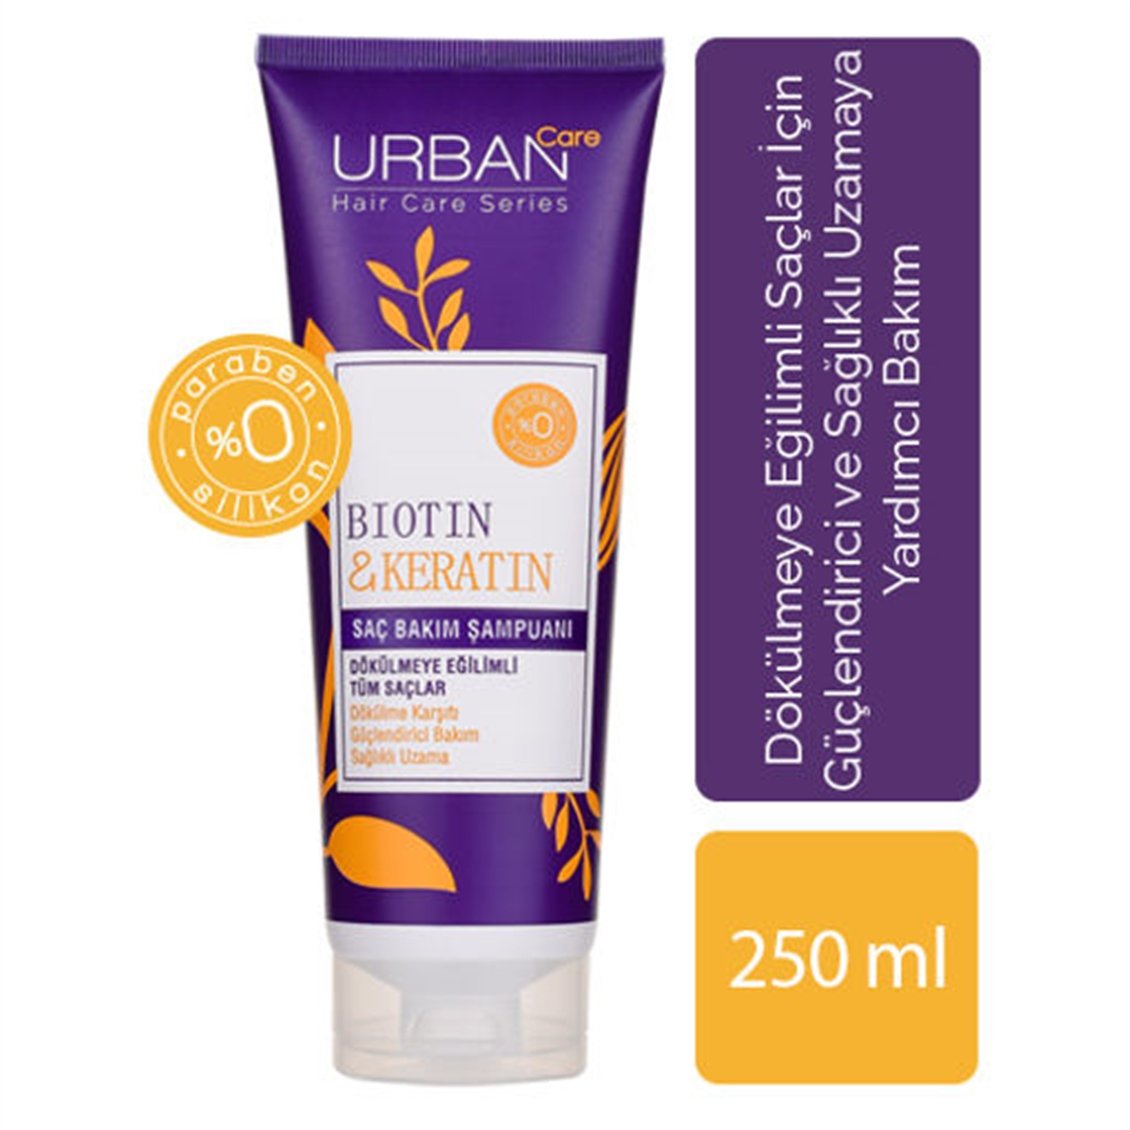 Urban Care Şampuan Biotin Keratin 250 ml - Onur Market